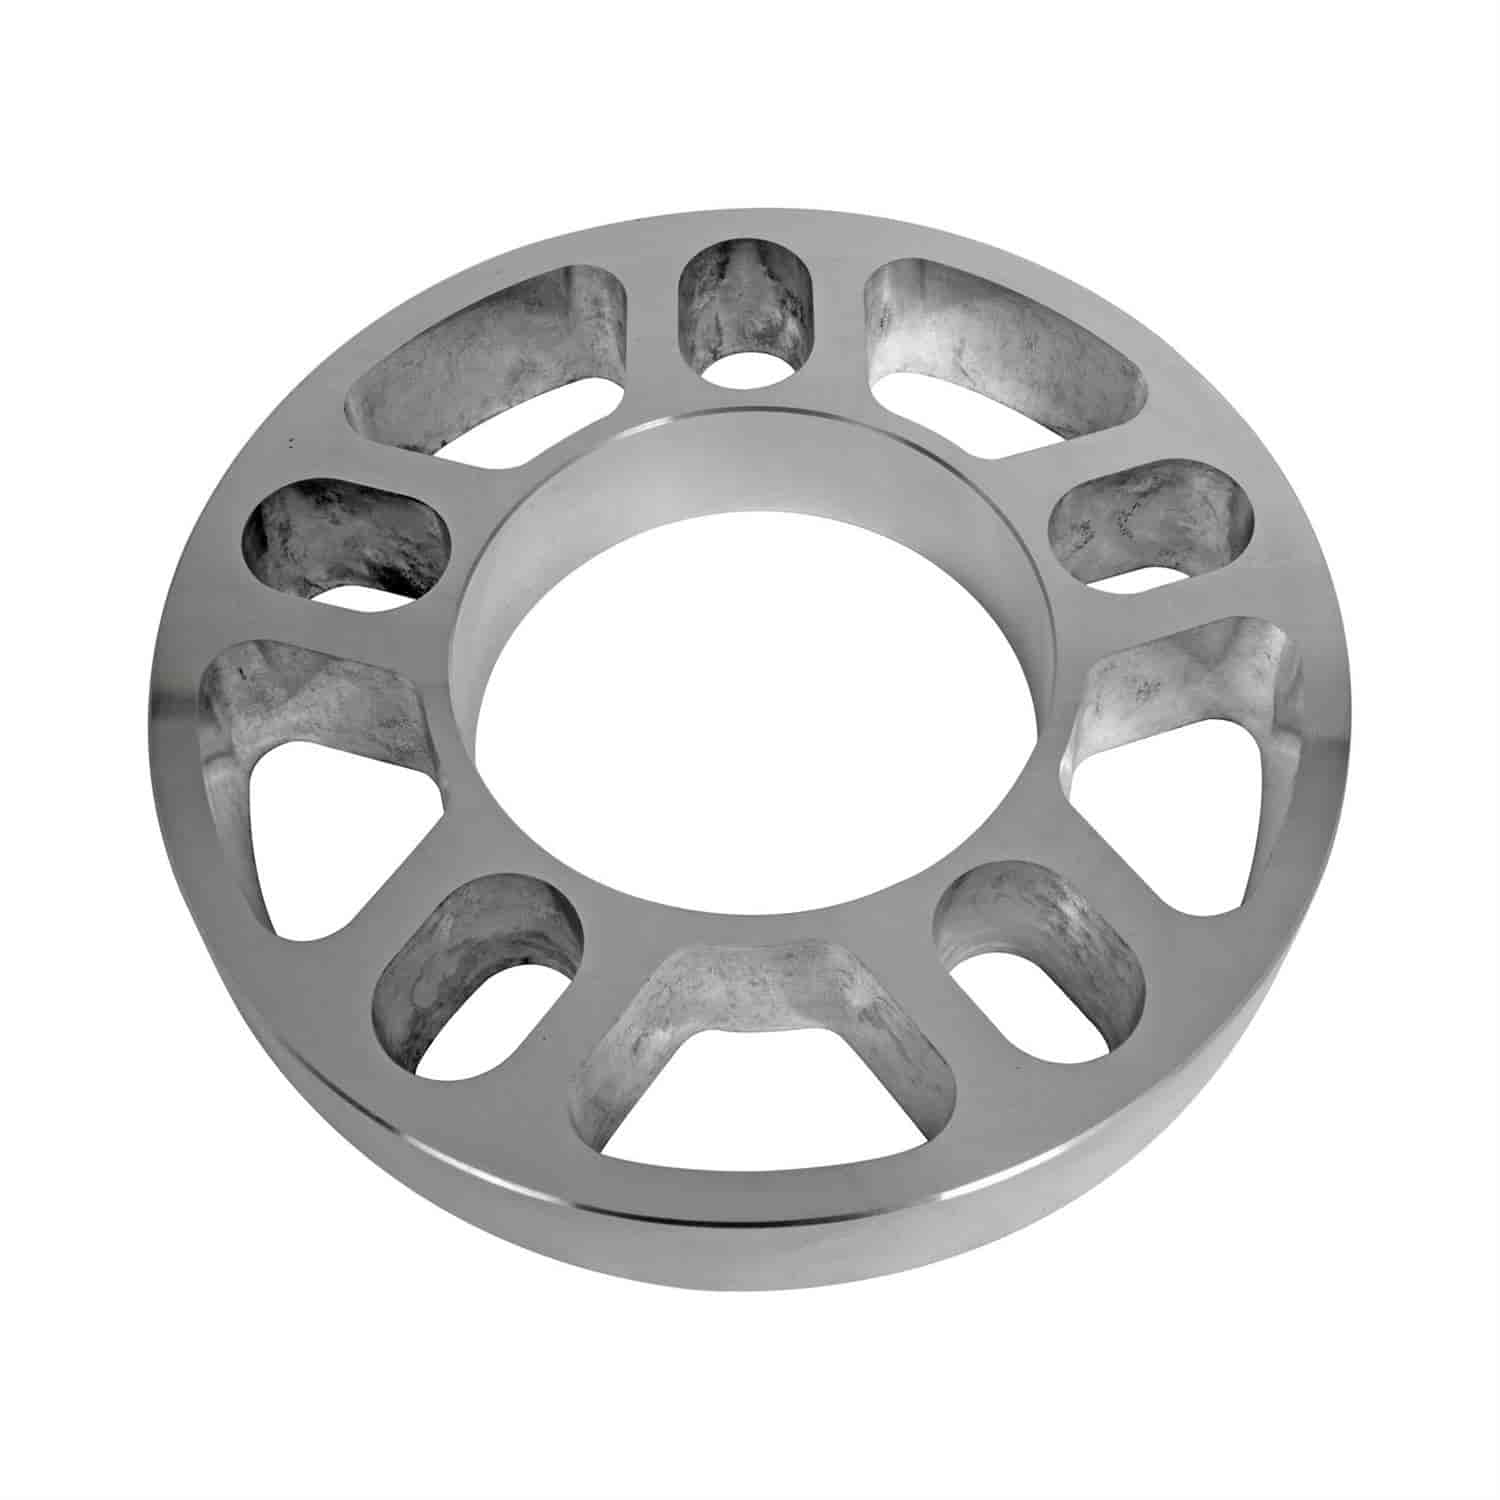 Billet Aluminum Wheel Spacers Universal 5-Lug